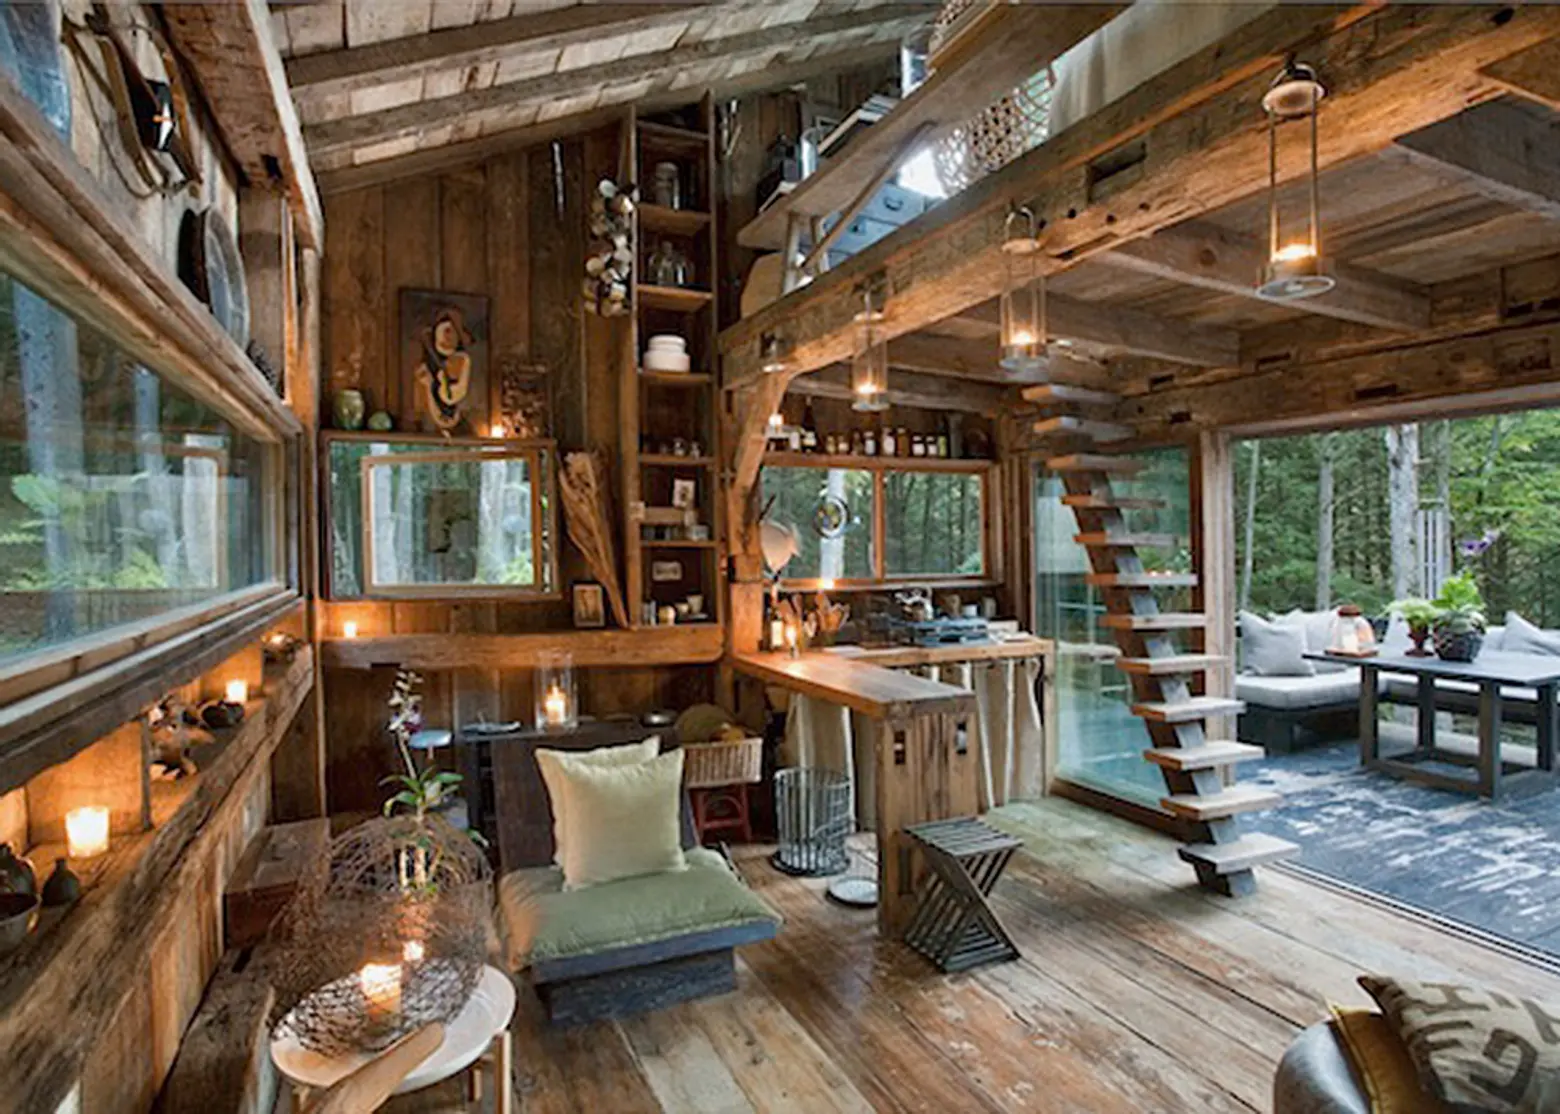 Scott Newkirk, rough wood cabin, woodland retreat, Yulan, New York, small cabin, off-grid, 14x14 Feet, 14 sq ft